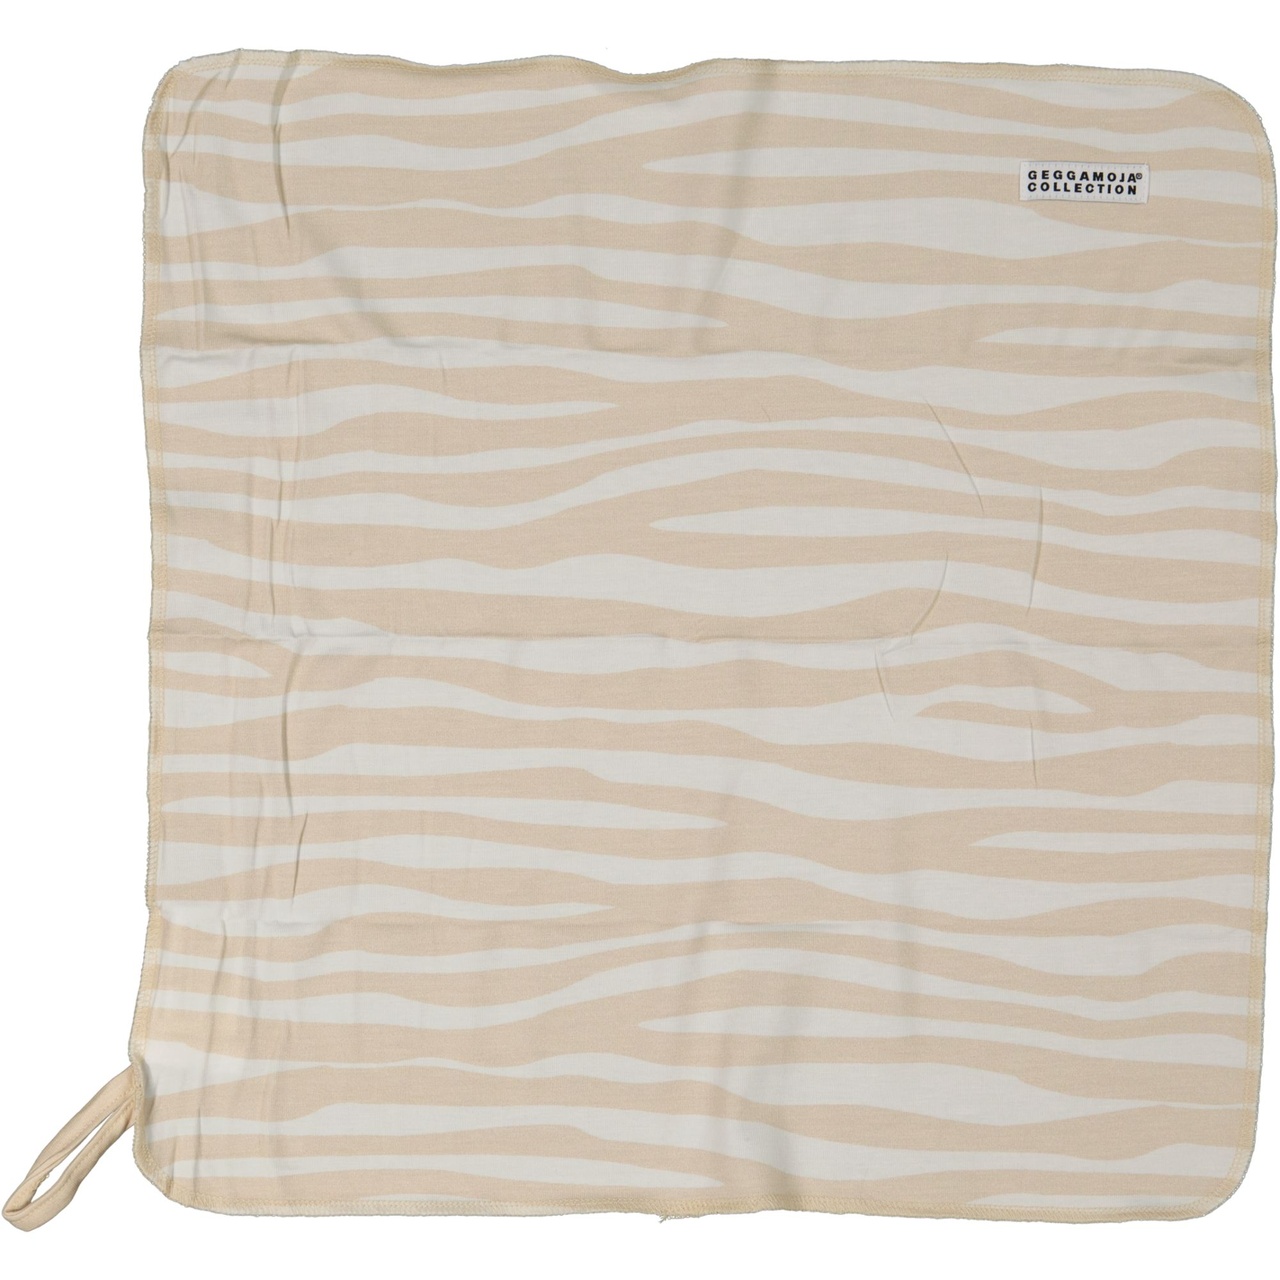 Bamboo Cuddly blanket Soft beige zebra